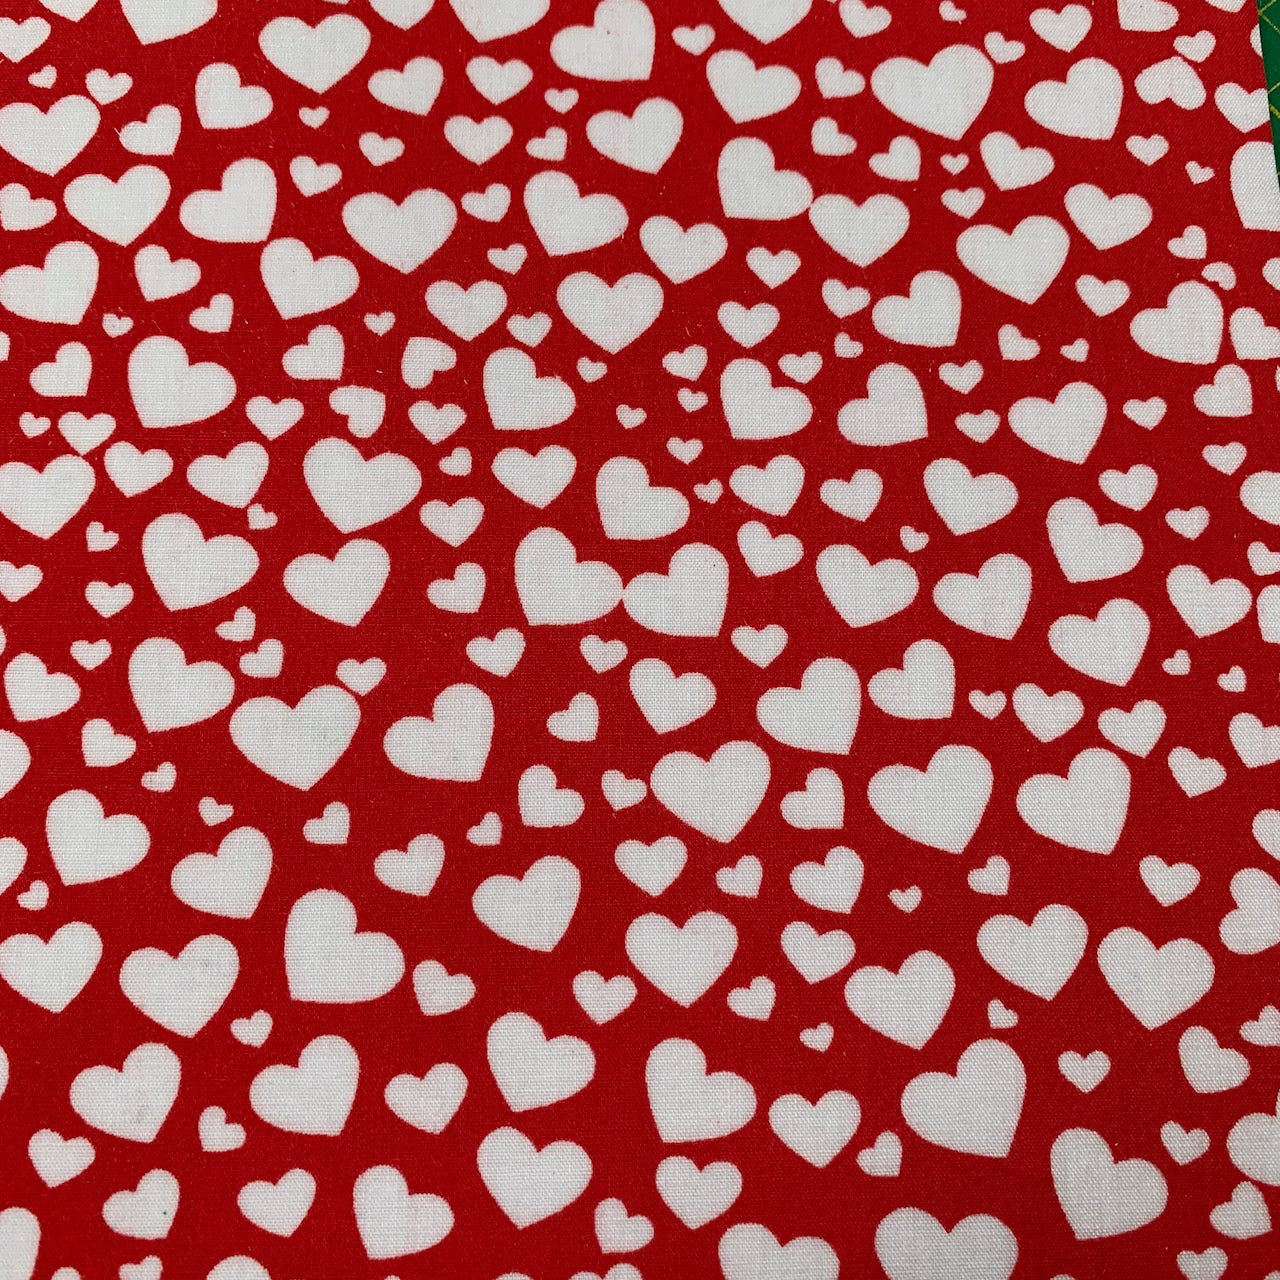 Fabric Felt Sheet - Hearts on Red